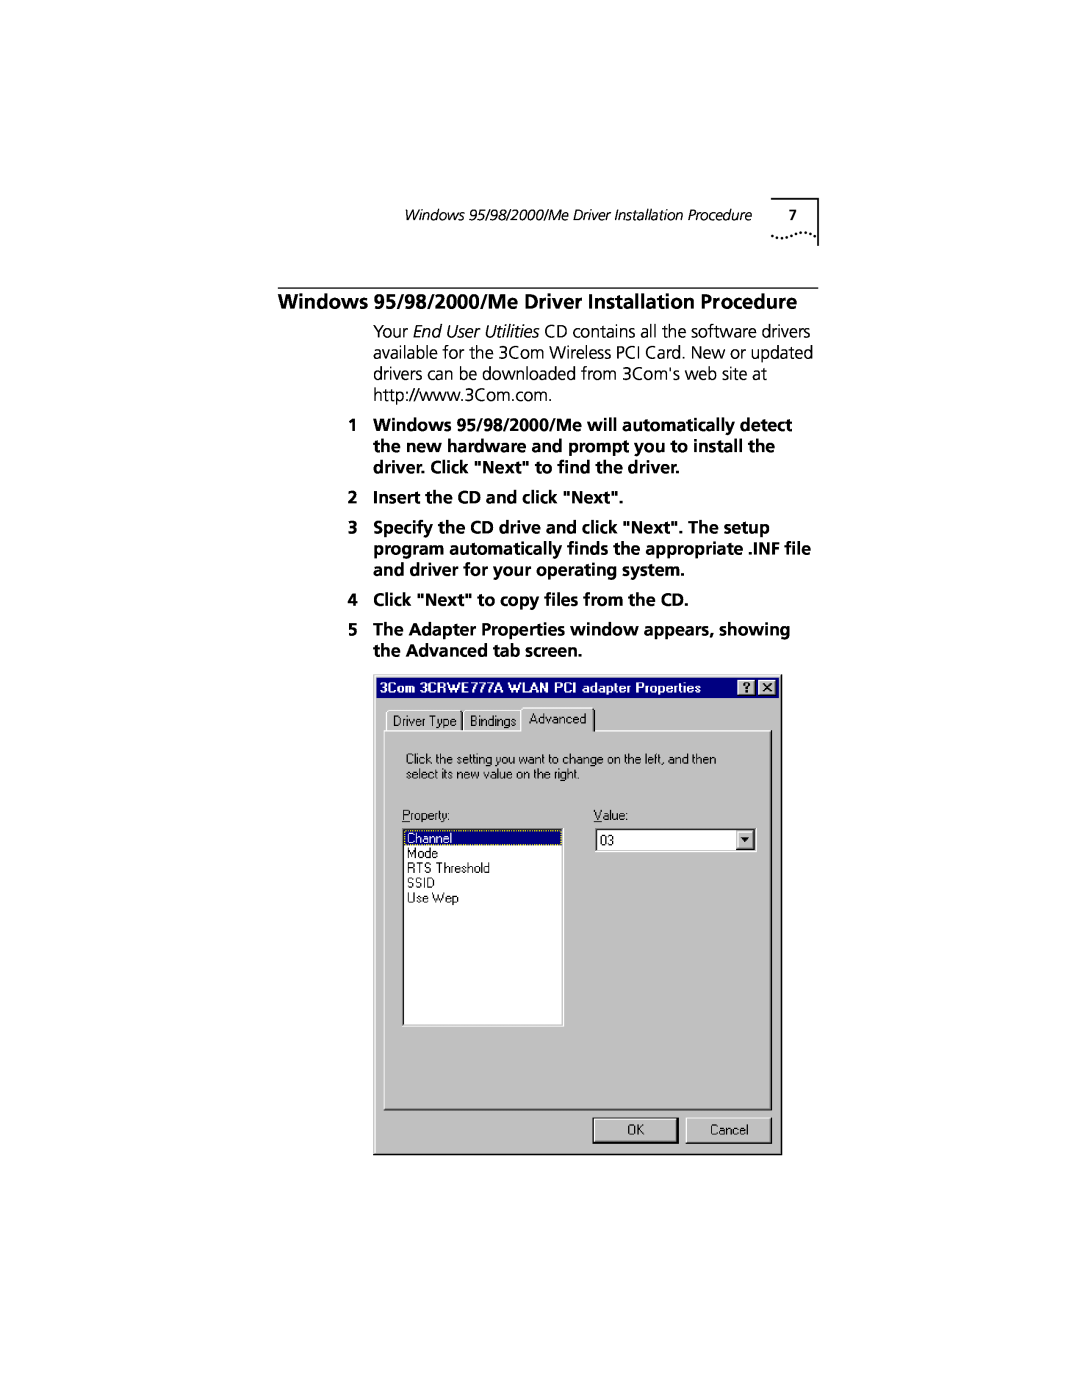 3Com 3CRWE777A manual Windows 95/98/2000/Me Driver Installation Procedure, Insert the CD and click Next 